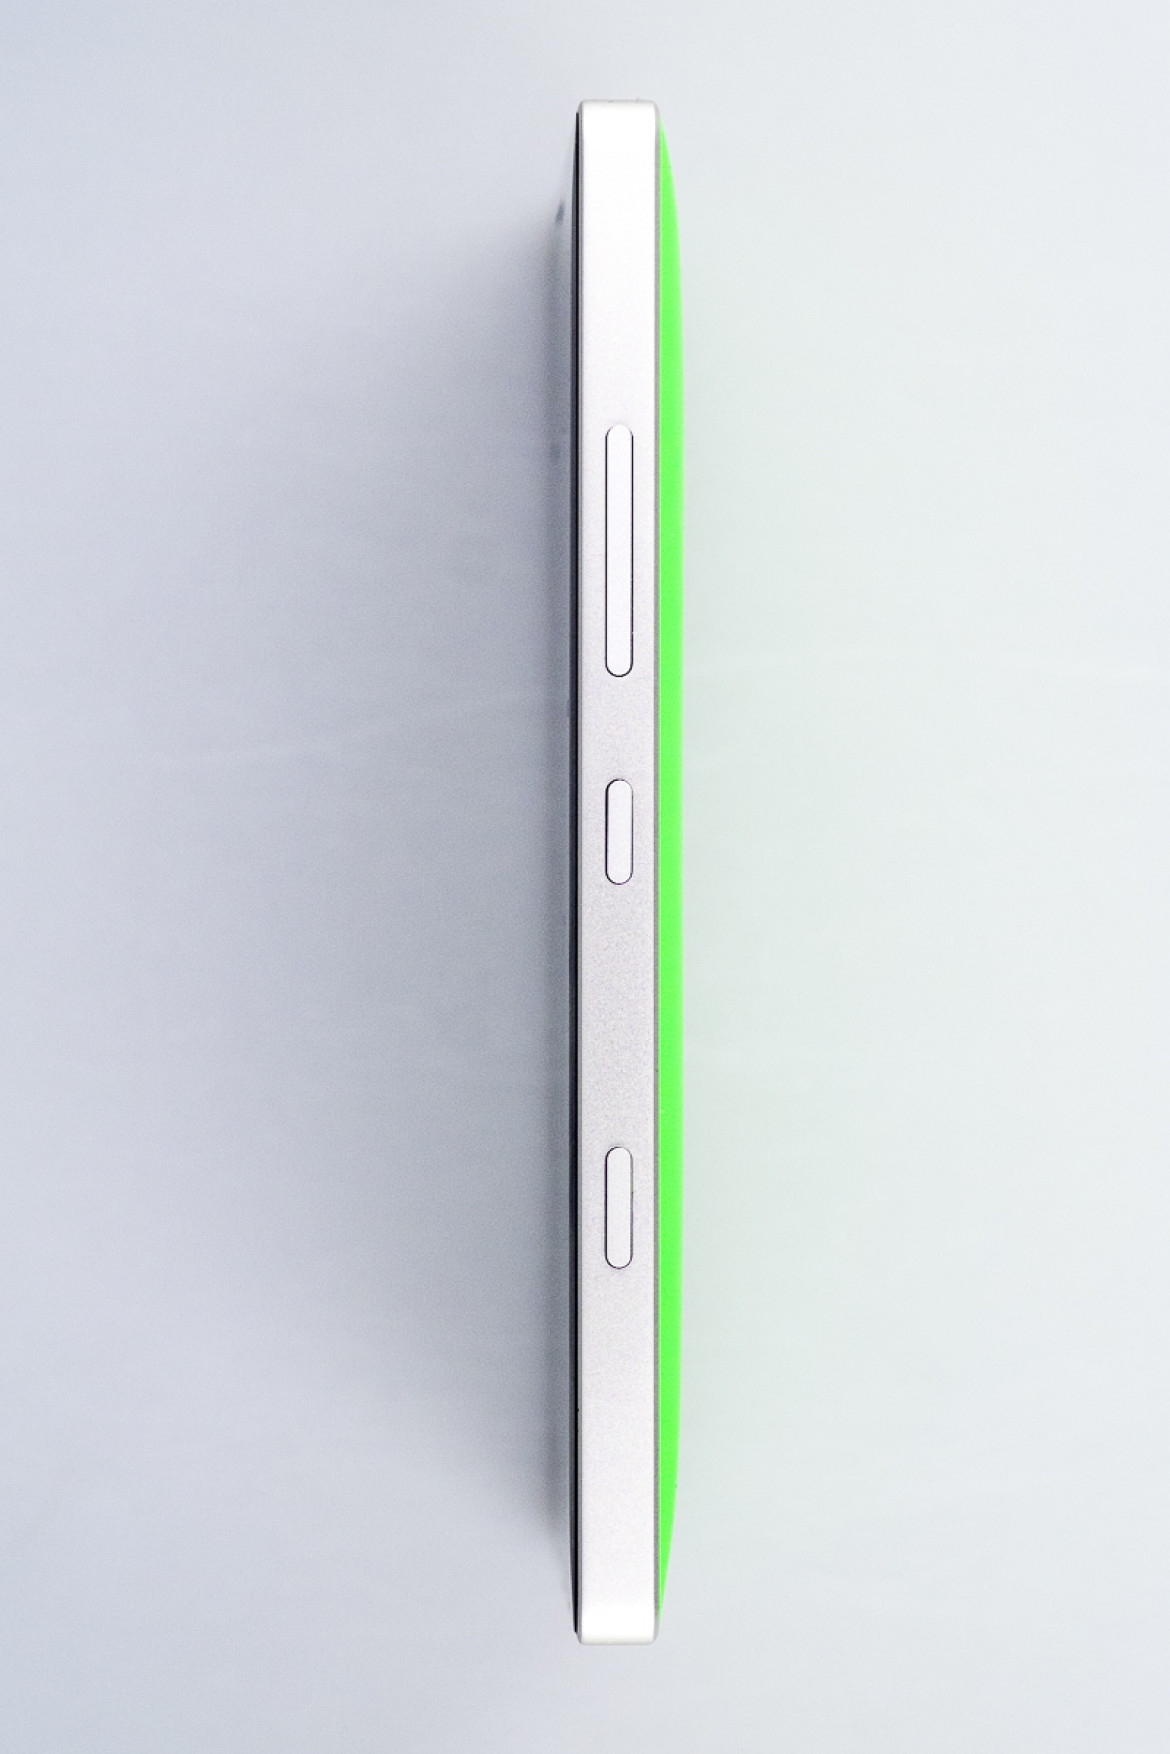 Nokia Lumia 930 - boczne klawisze